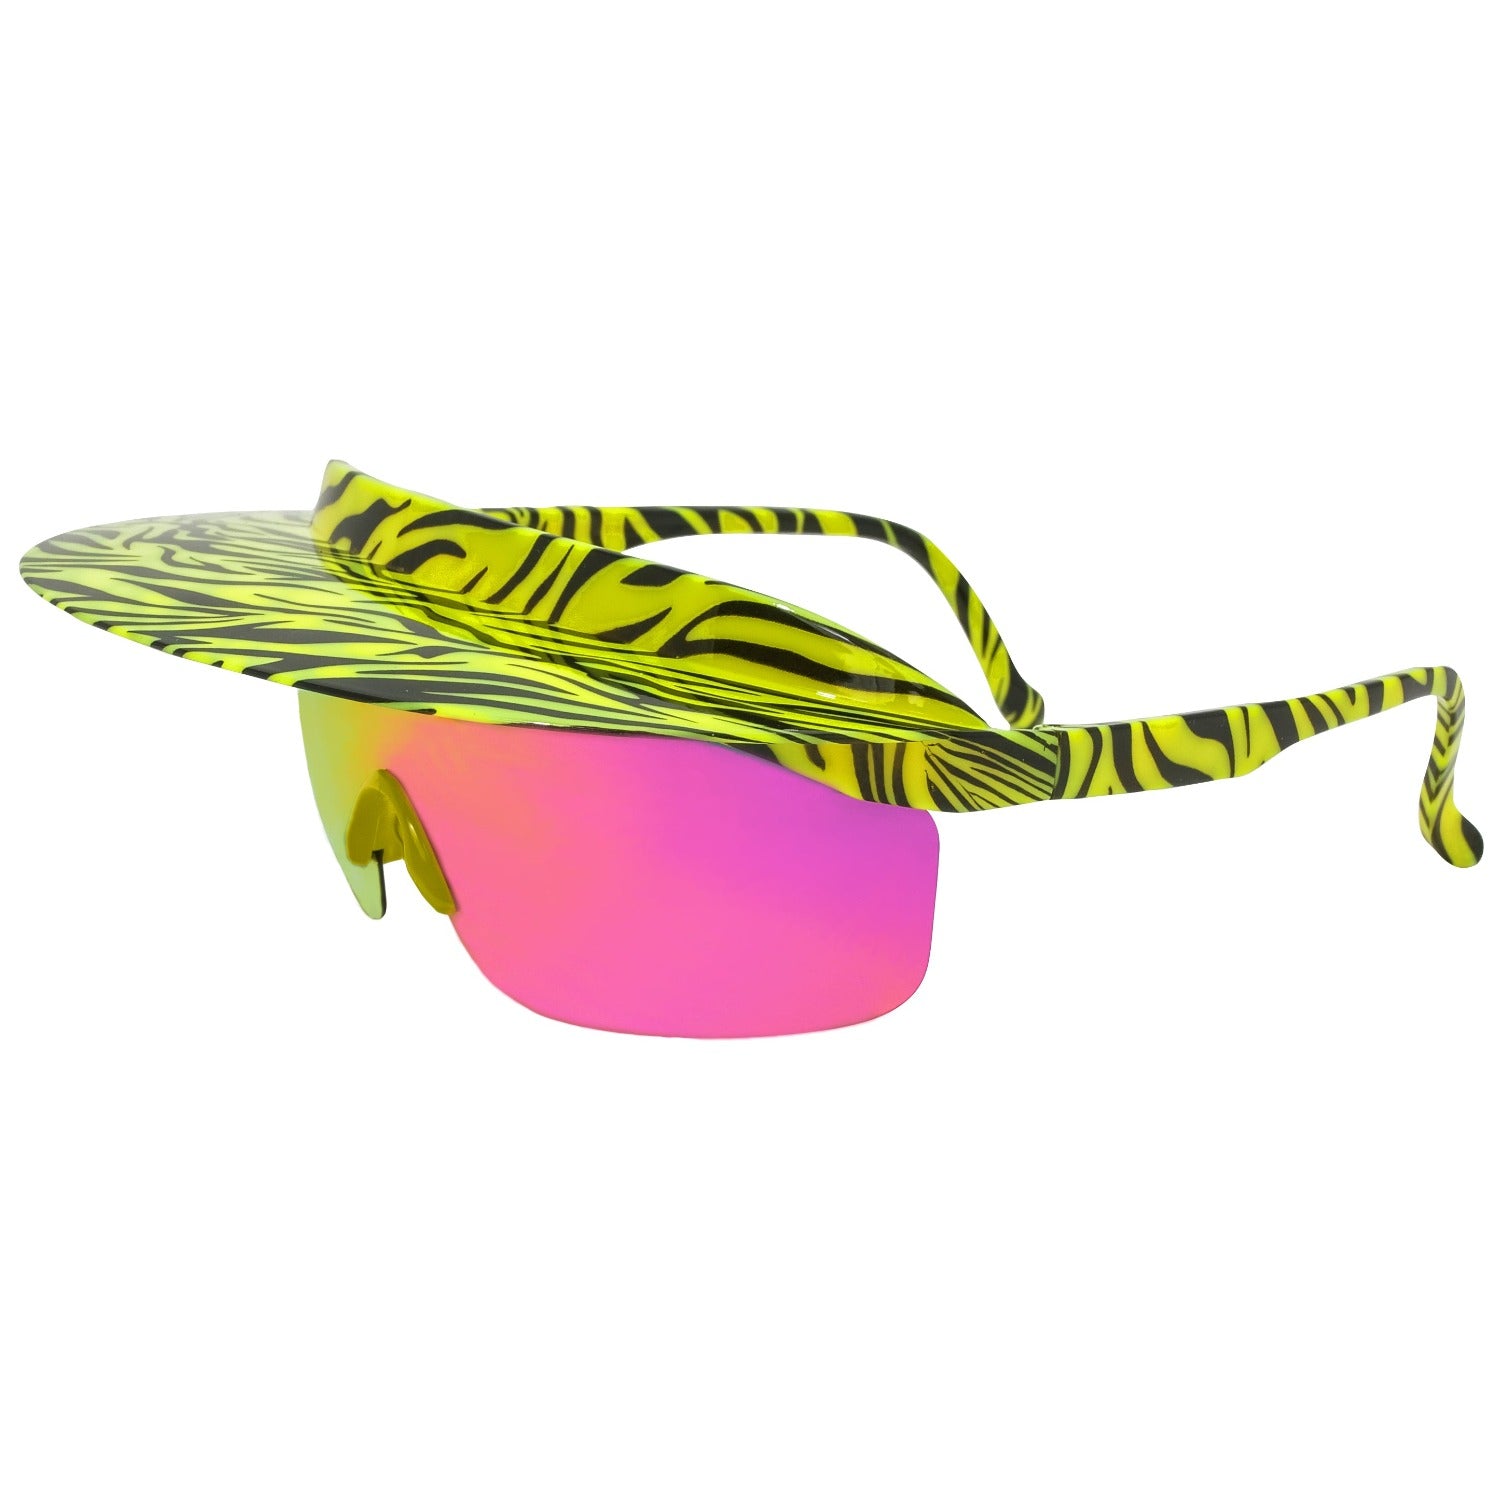 Smack Down Visor Shade Sunglasses - Retro randy savage inspired 80s 90s sunglasses UV400 Polarized vintage visor shades. Yellow and black tiger throwback design. B Fresh Gear